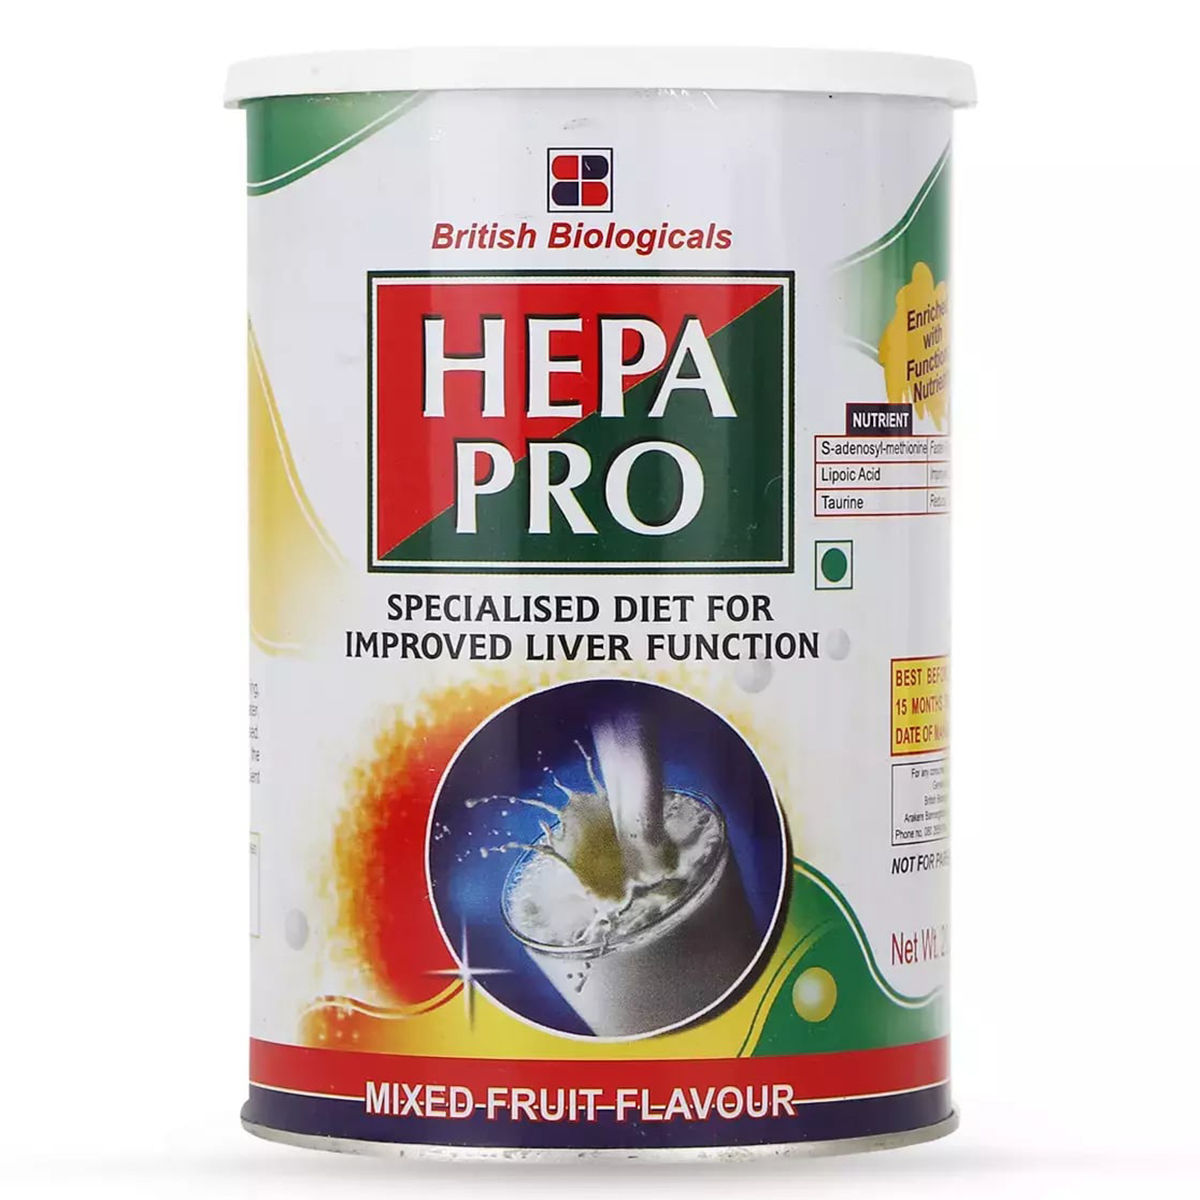 Buy Hepa Pro Mixed Fruit Flavour Powder, 200 gm Tin Online